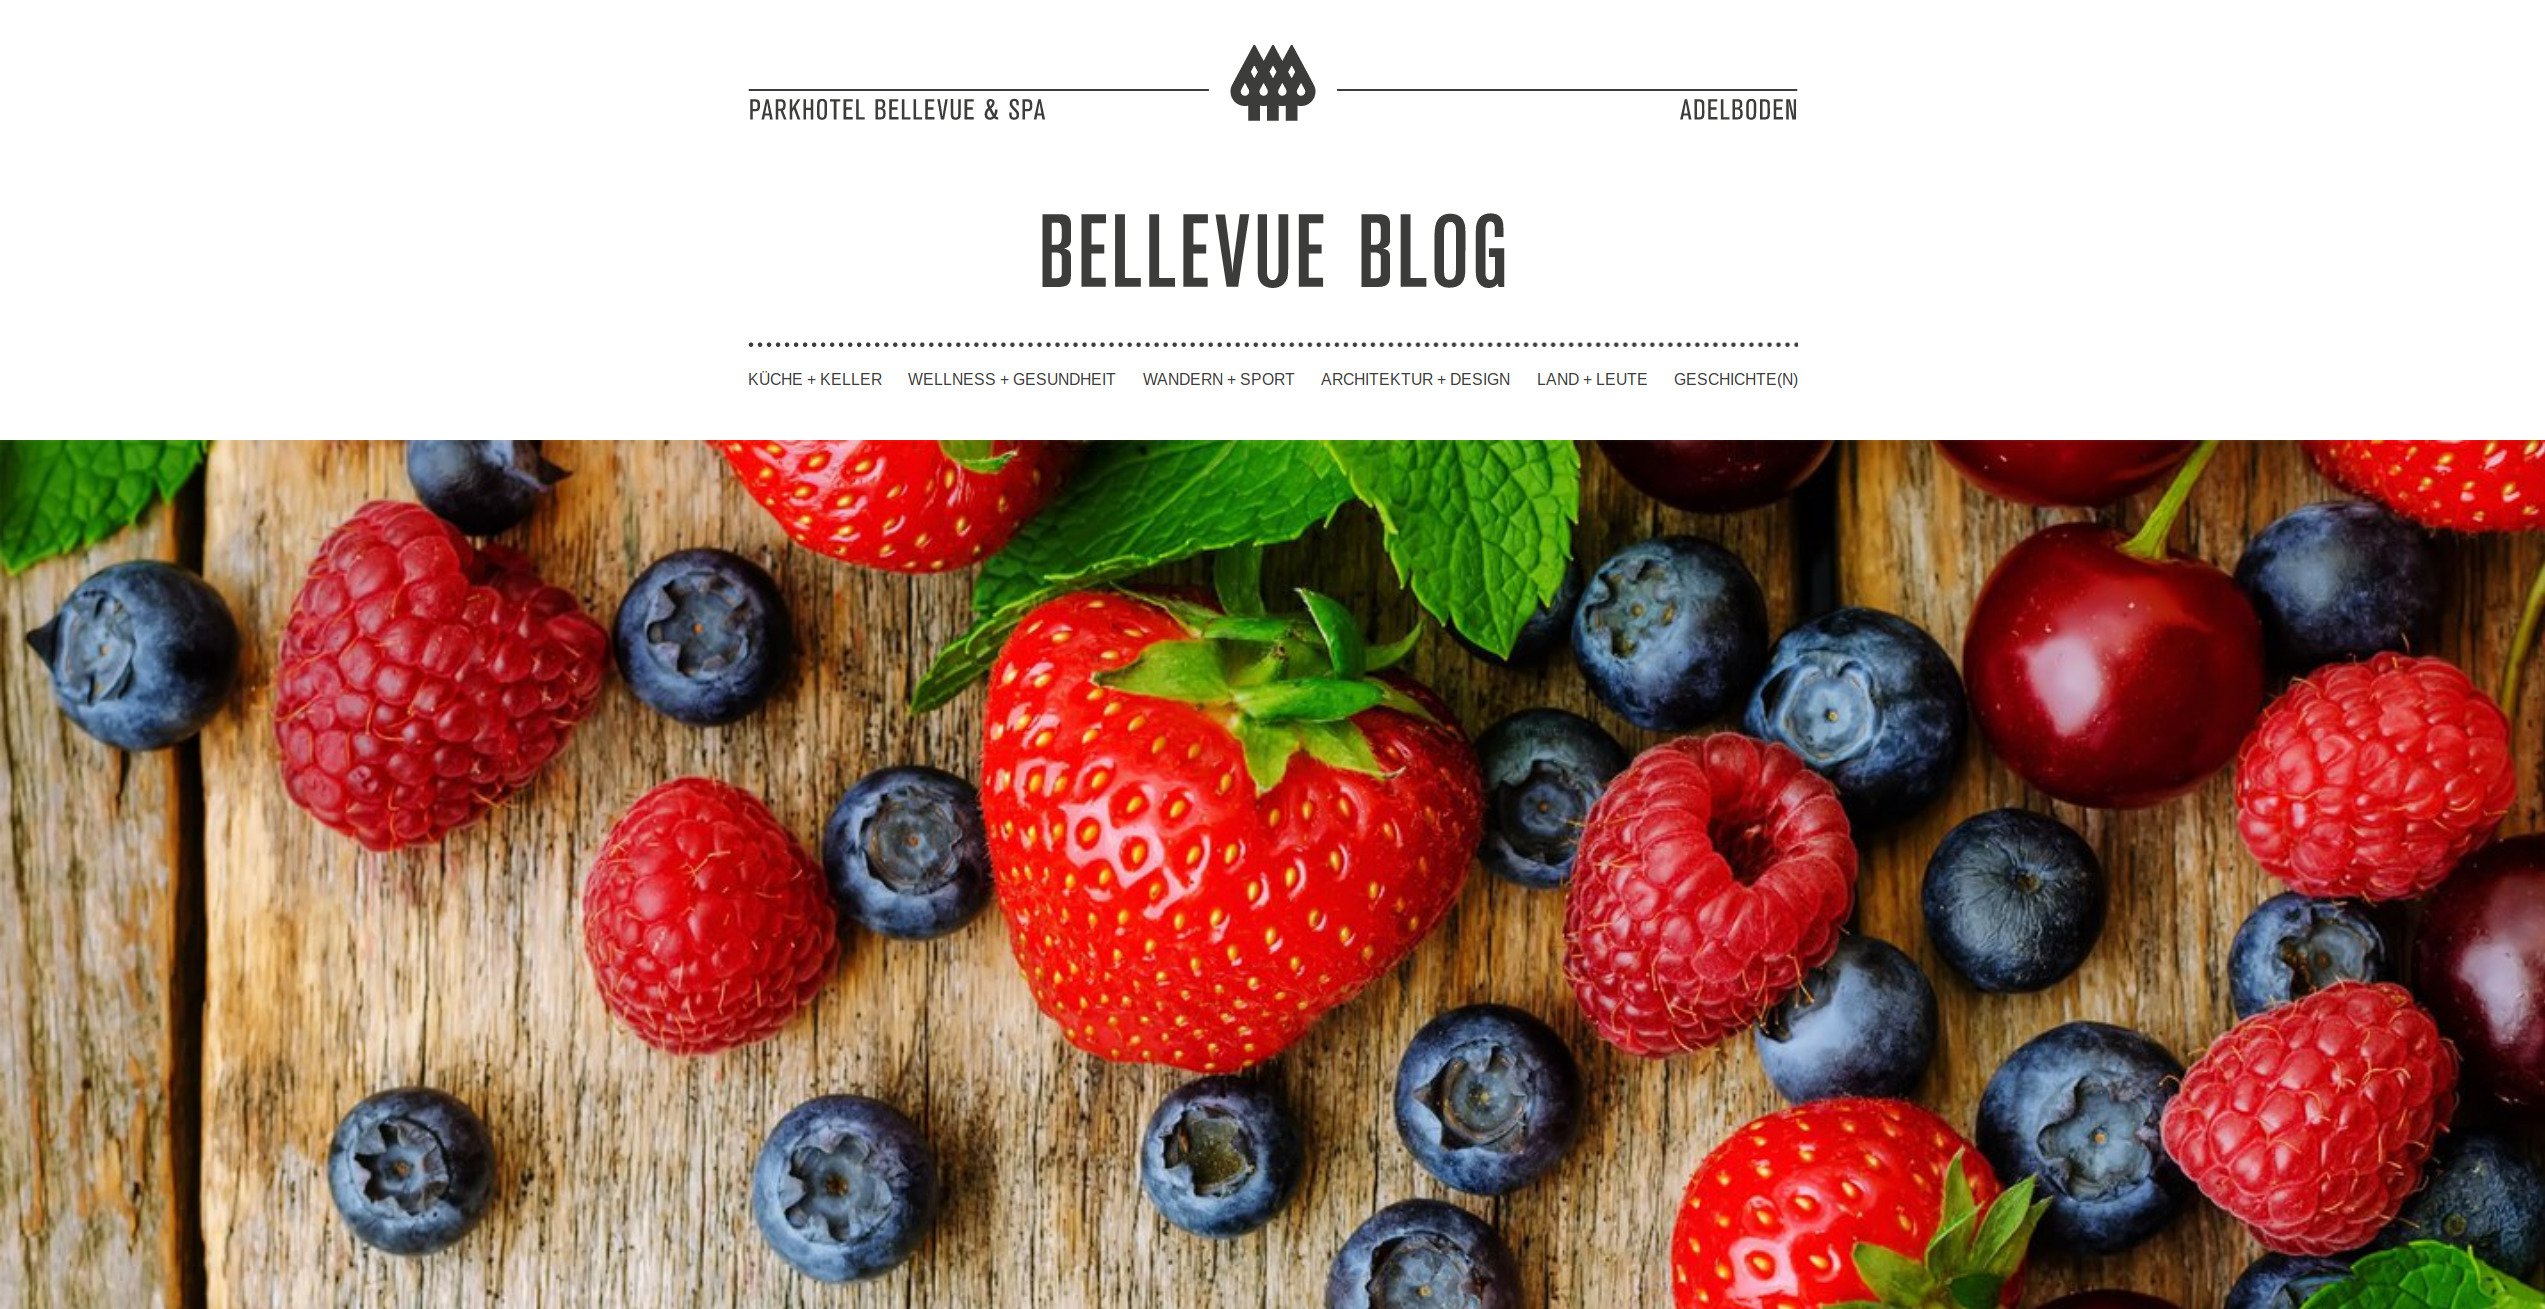 Fullsize 2 / Bellevue Blog